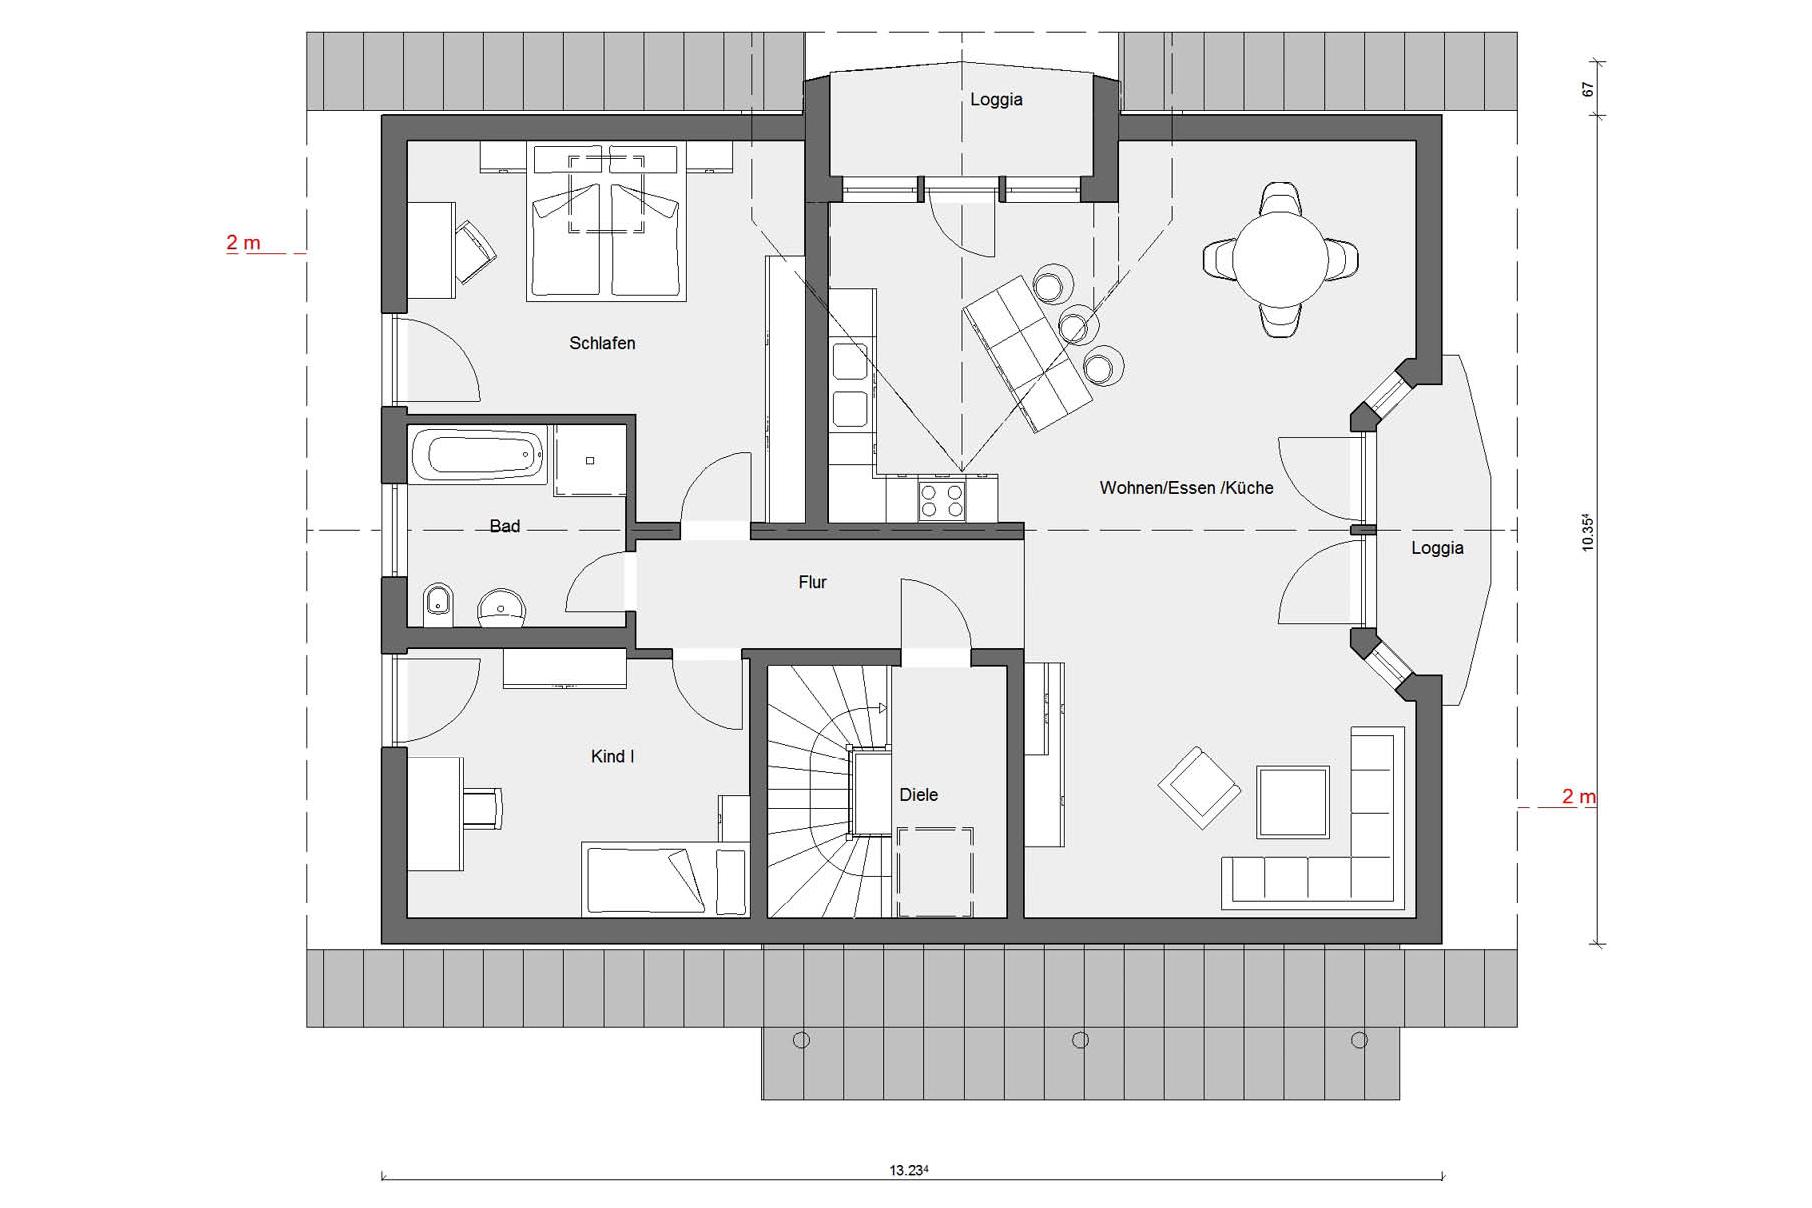 Floor plan attic M 15-226.1 House with granny flat